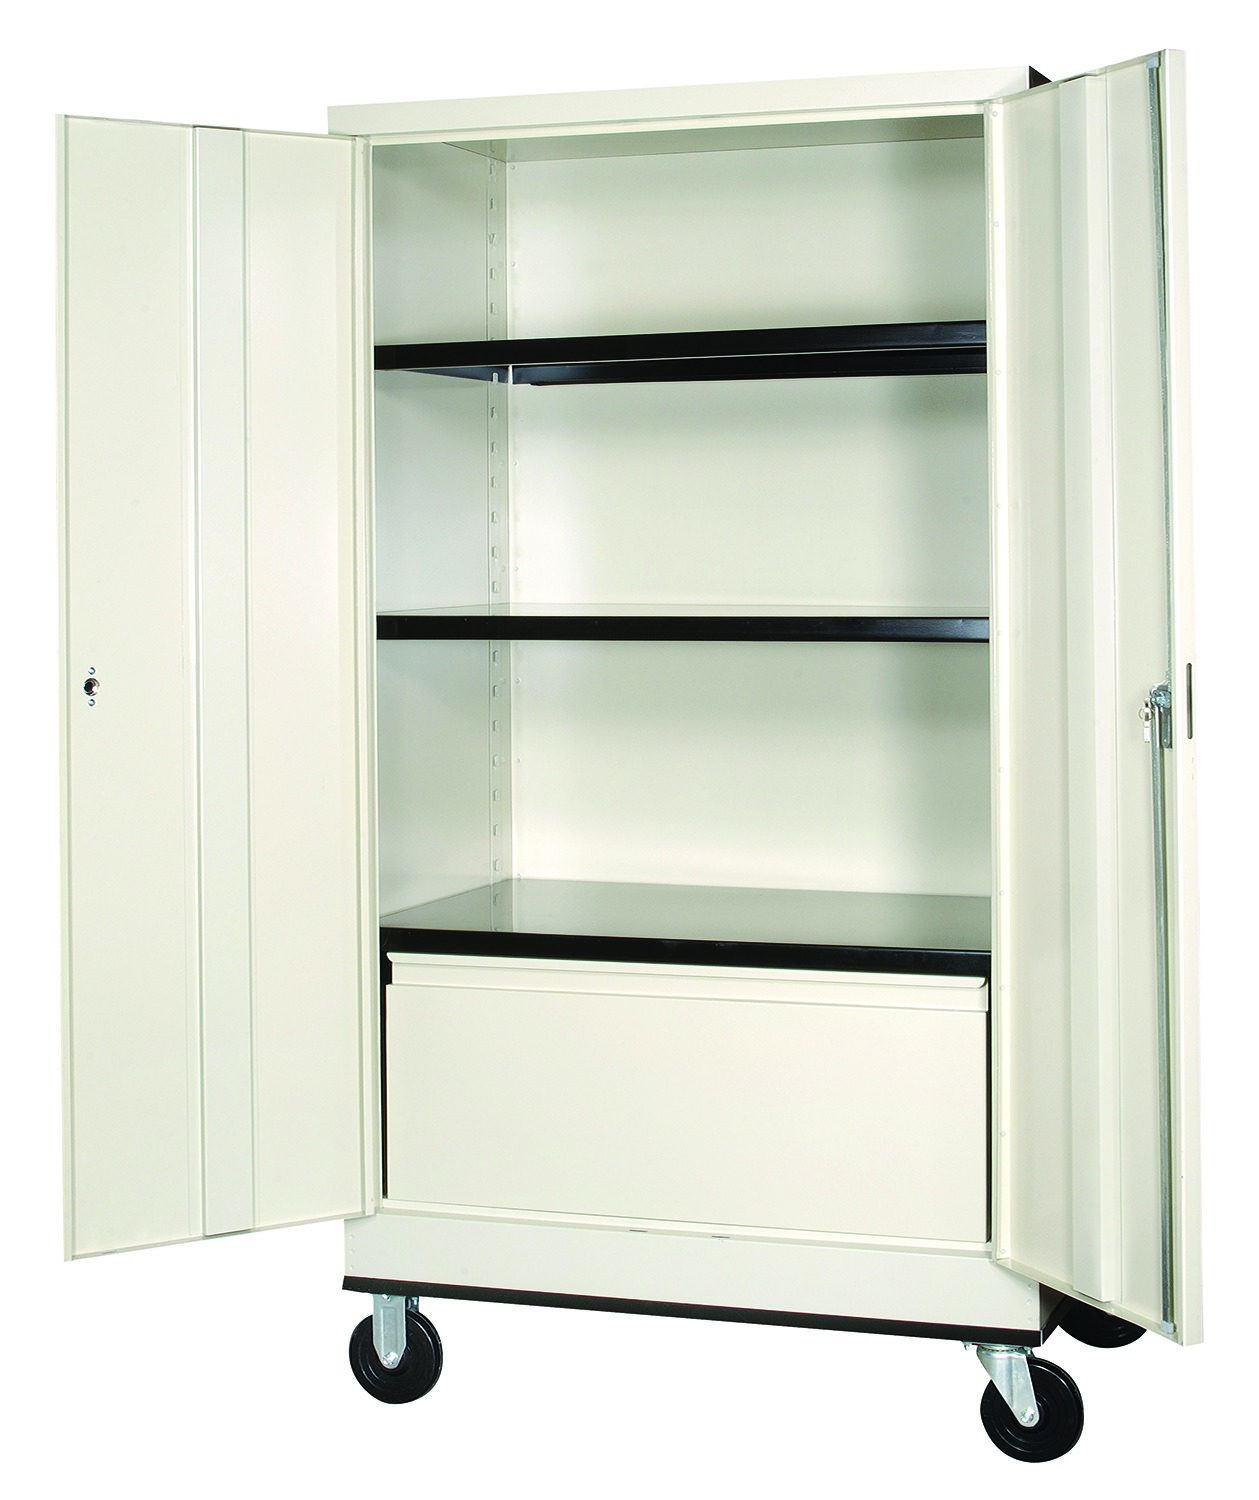 Kurtz Bros Parent Metal Janitorial Storage Cabinets